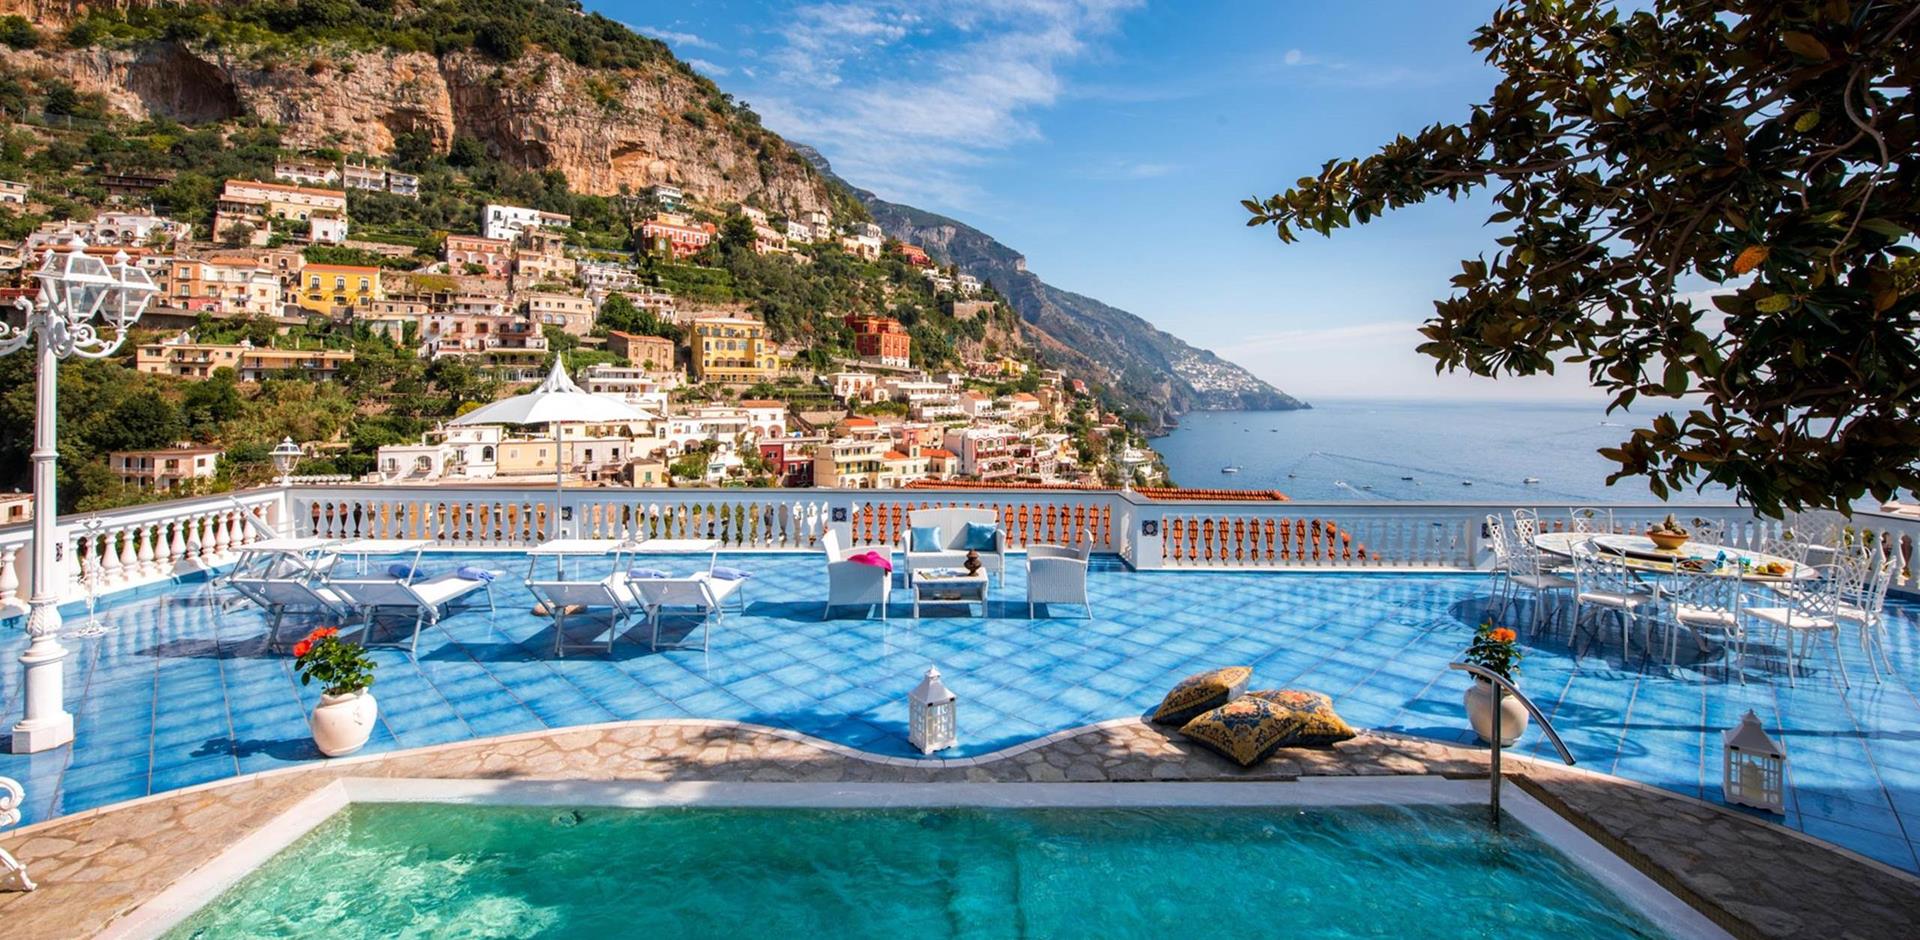 View From Pool, Casa degli Agrumi, Amalfi Coast